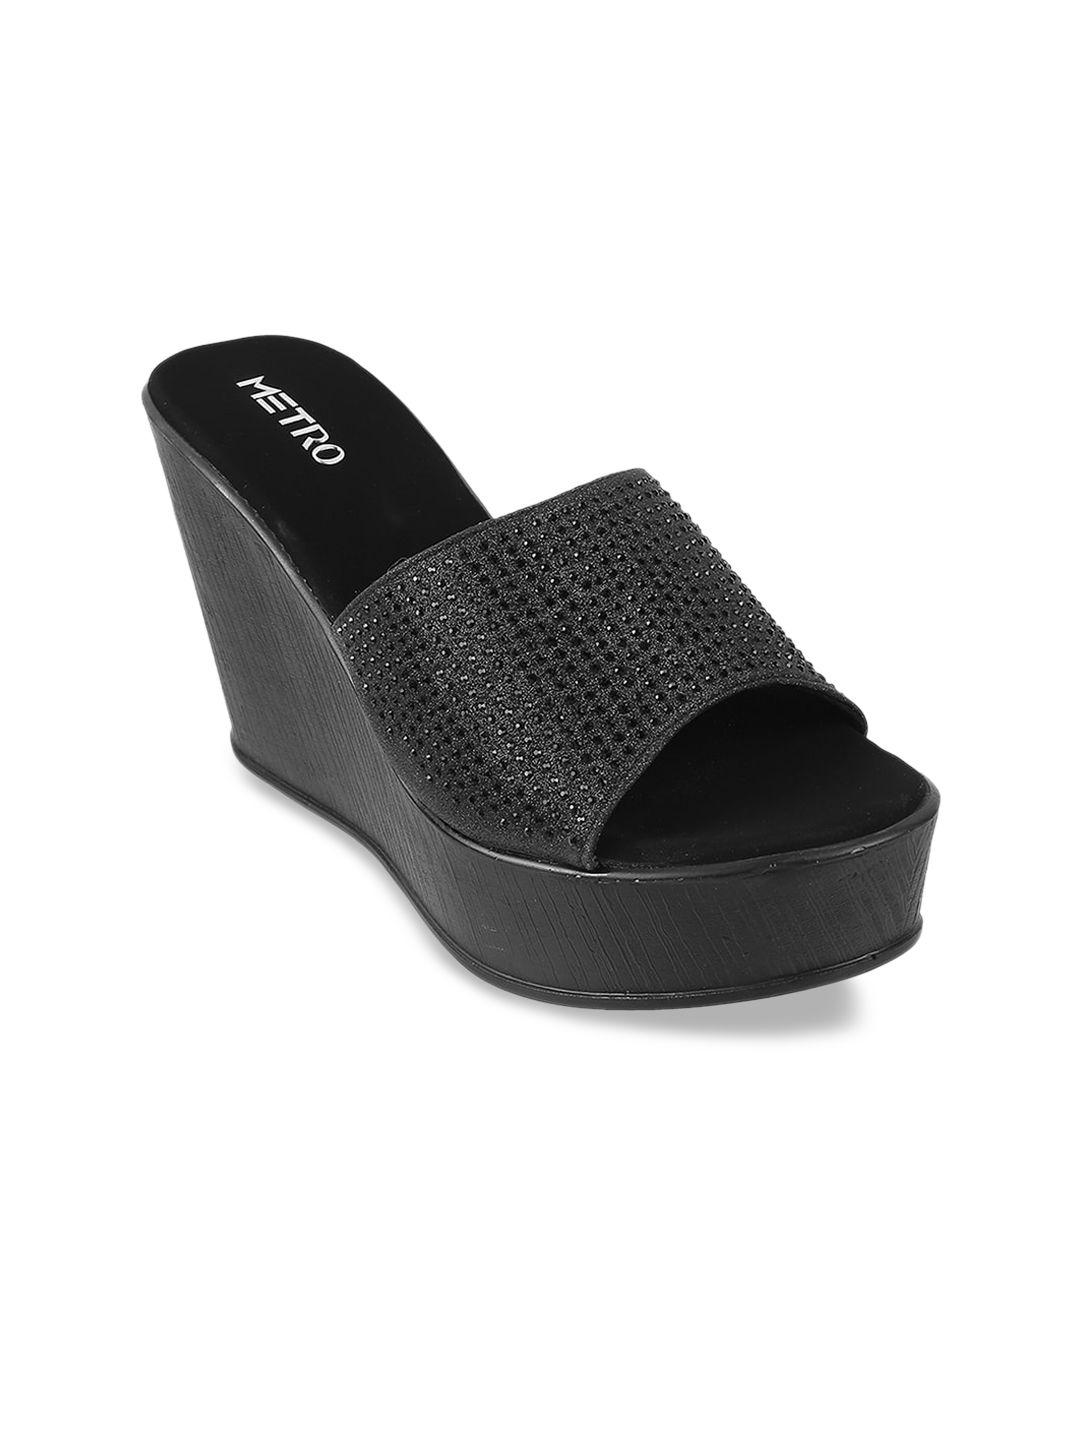 metro black wedge sandals